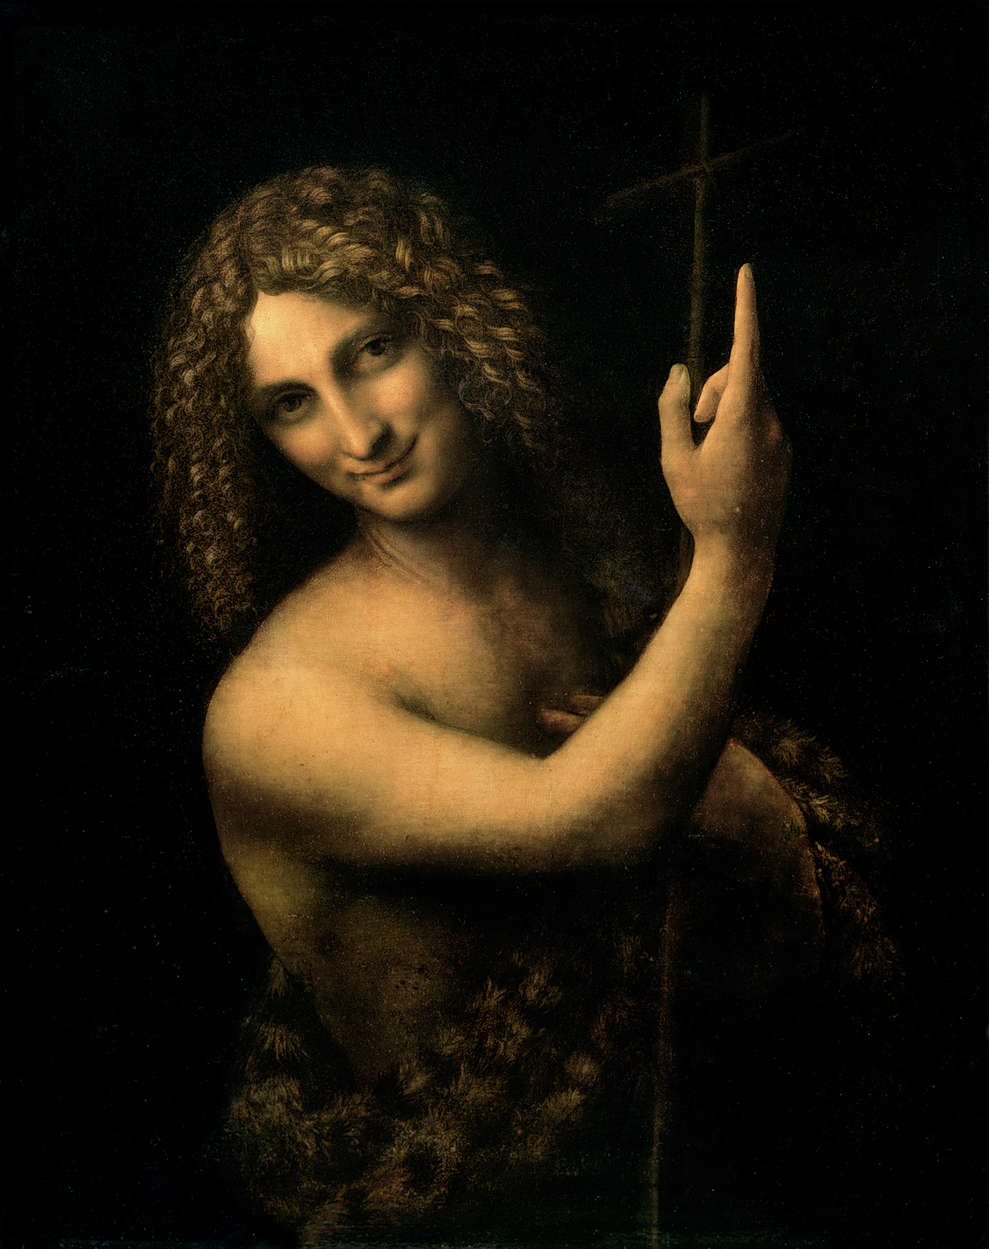             Fototapete "Johannes der Täufer" von Leonardo da Vinci
        